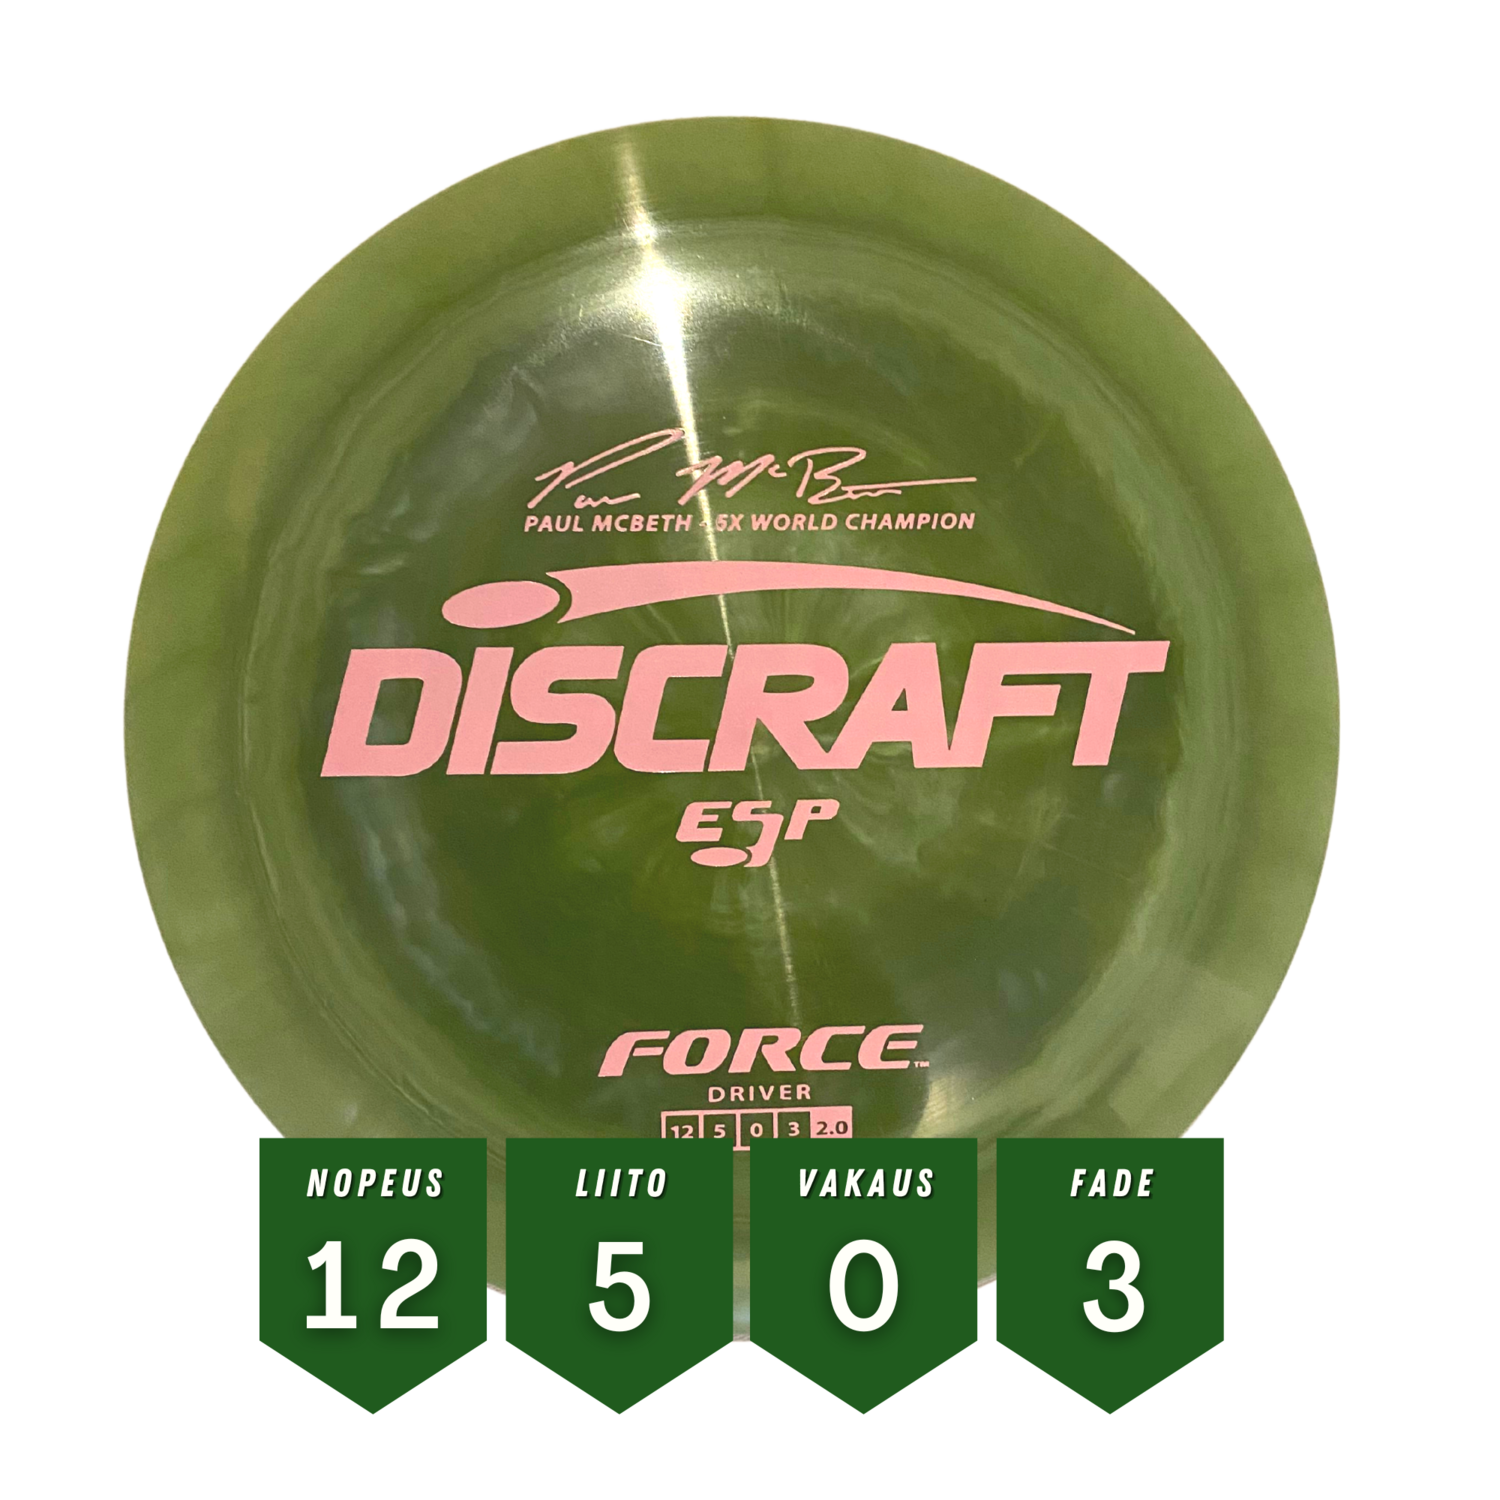 Discraft Esp Force -  Paul McBeth 5x